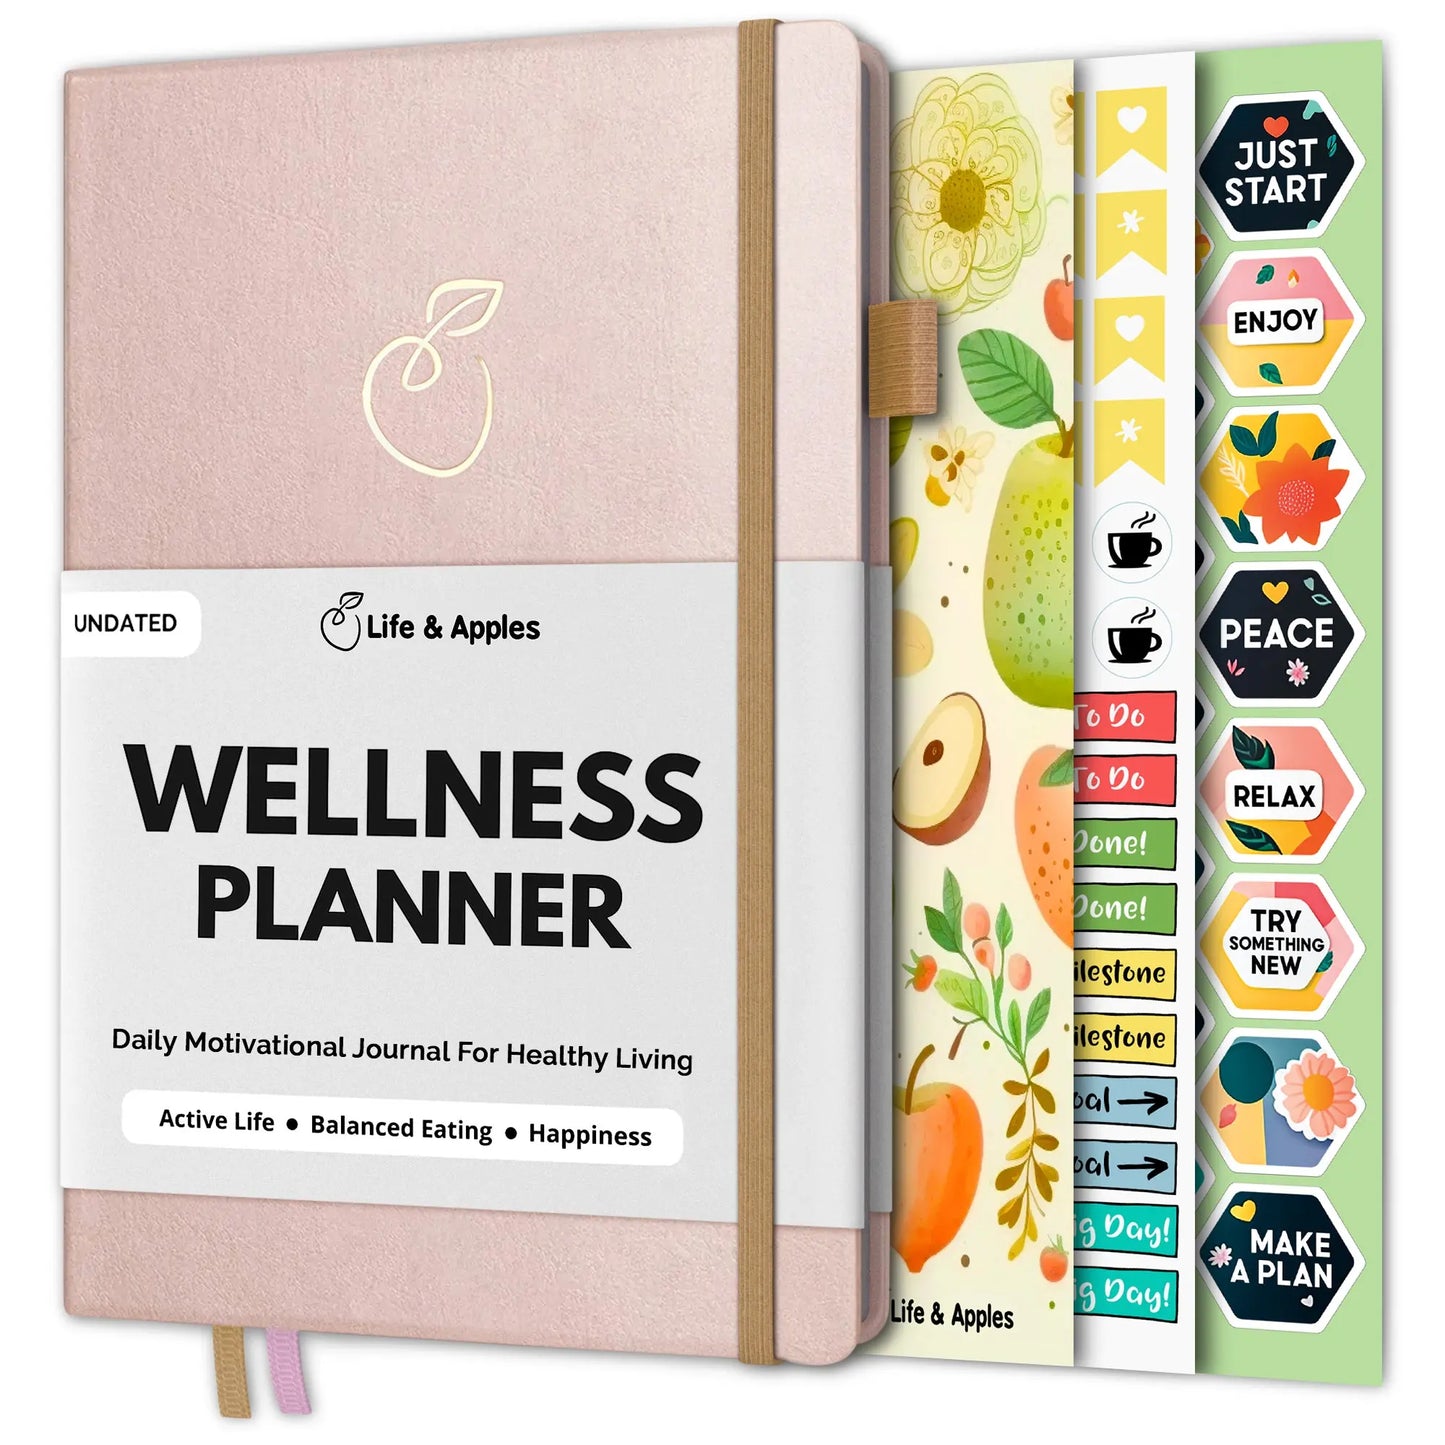 The Wellness Planner - Life & Apples